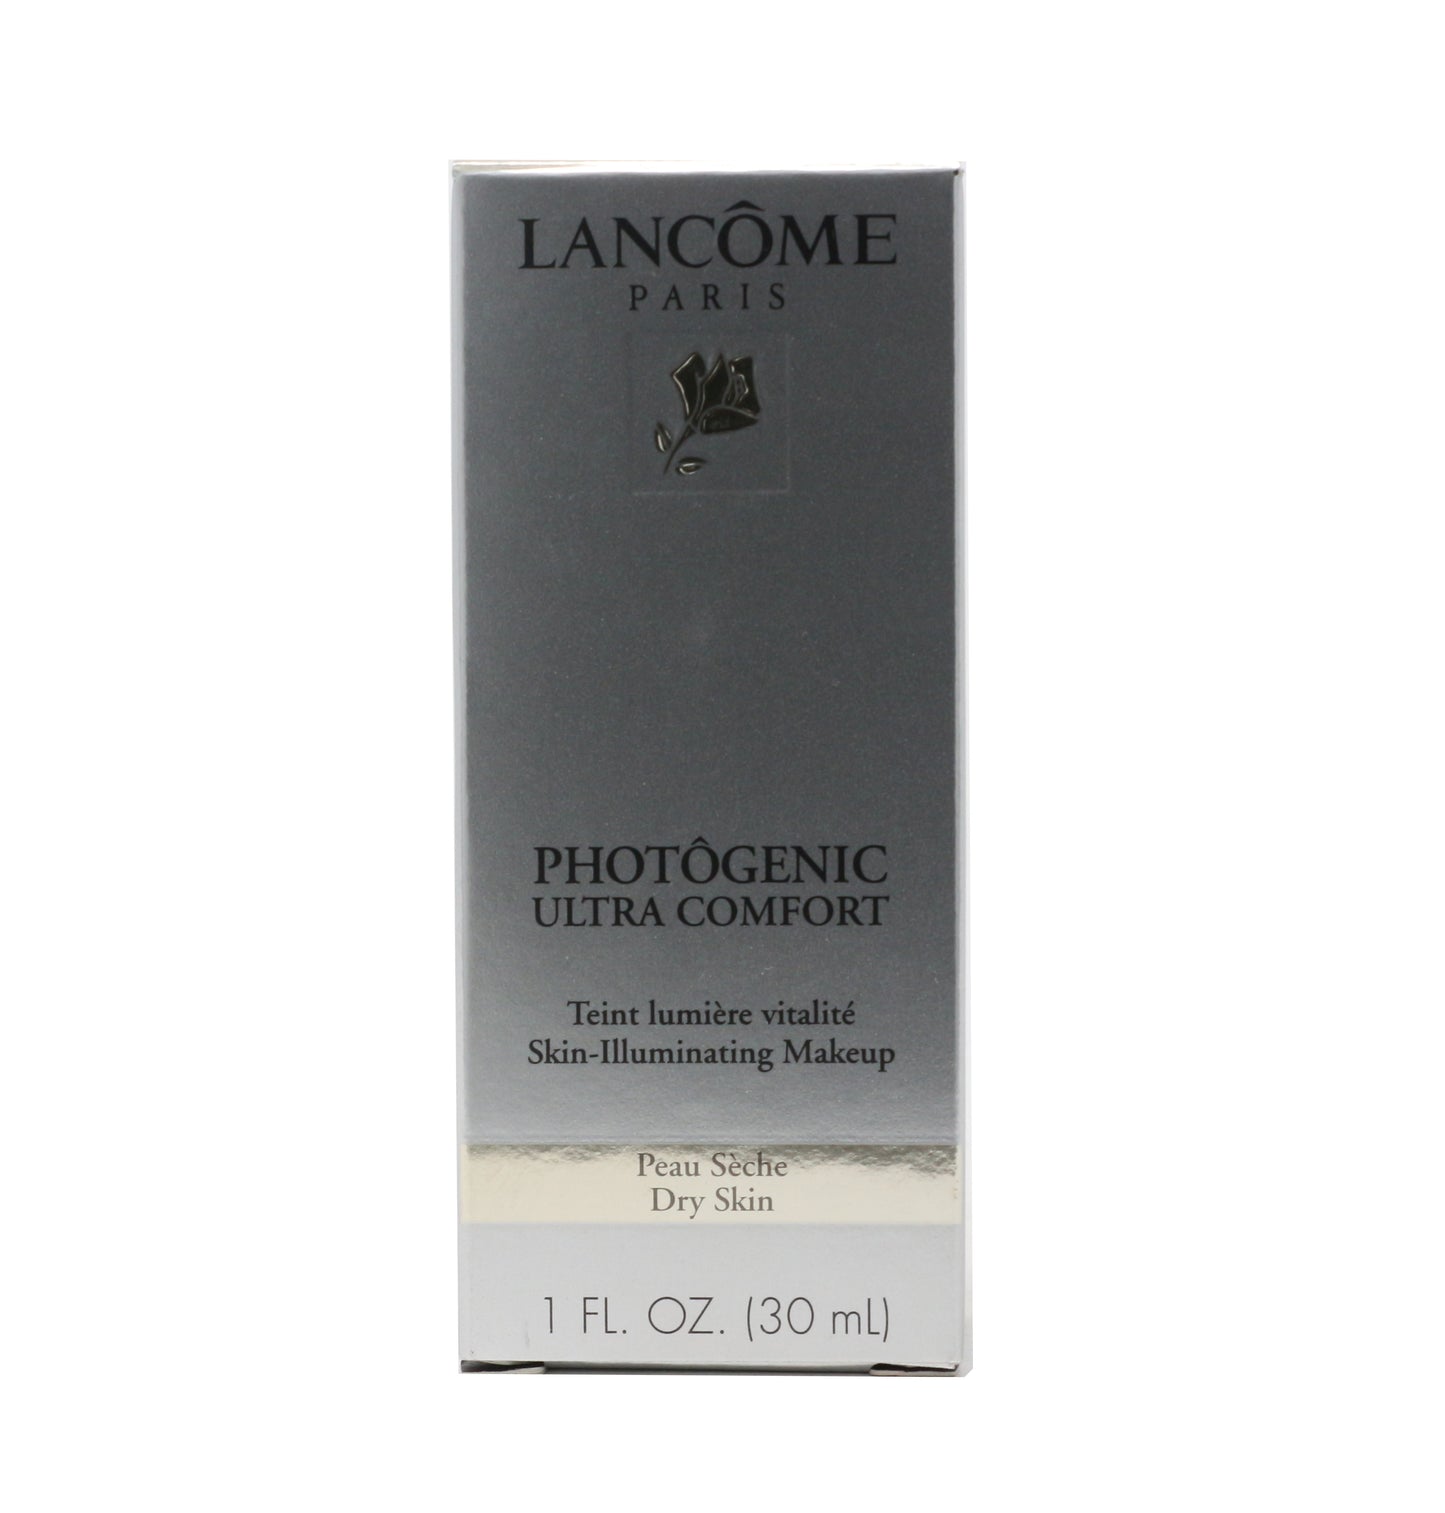 Lancome Photogenic Ultra Comfort Skin-Illuminating Makeup 1oz 2 Bisque New InBox